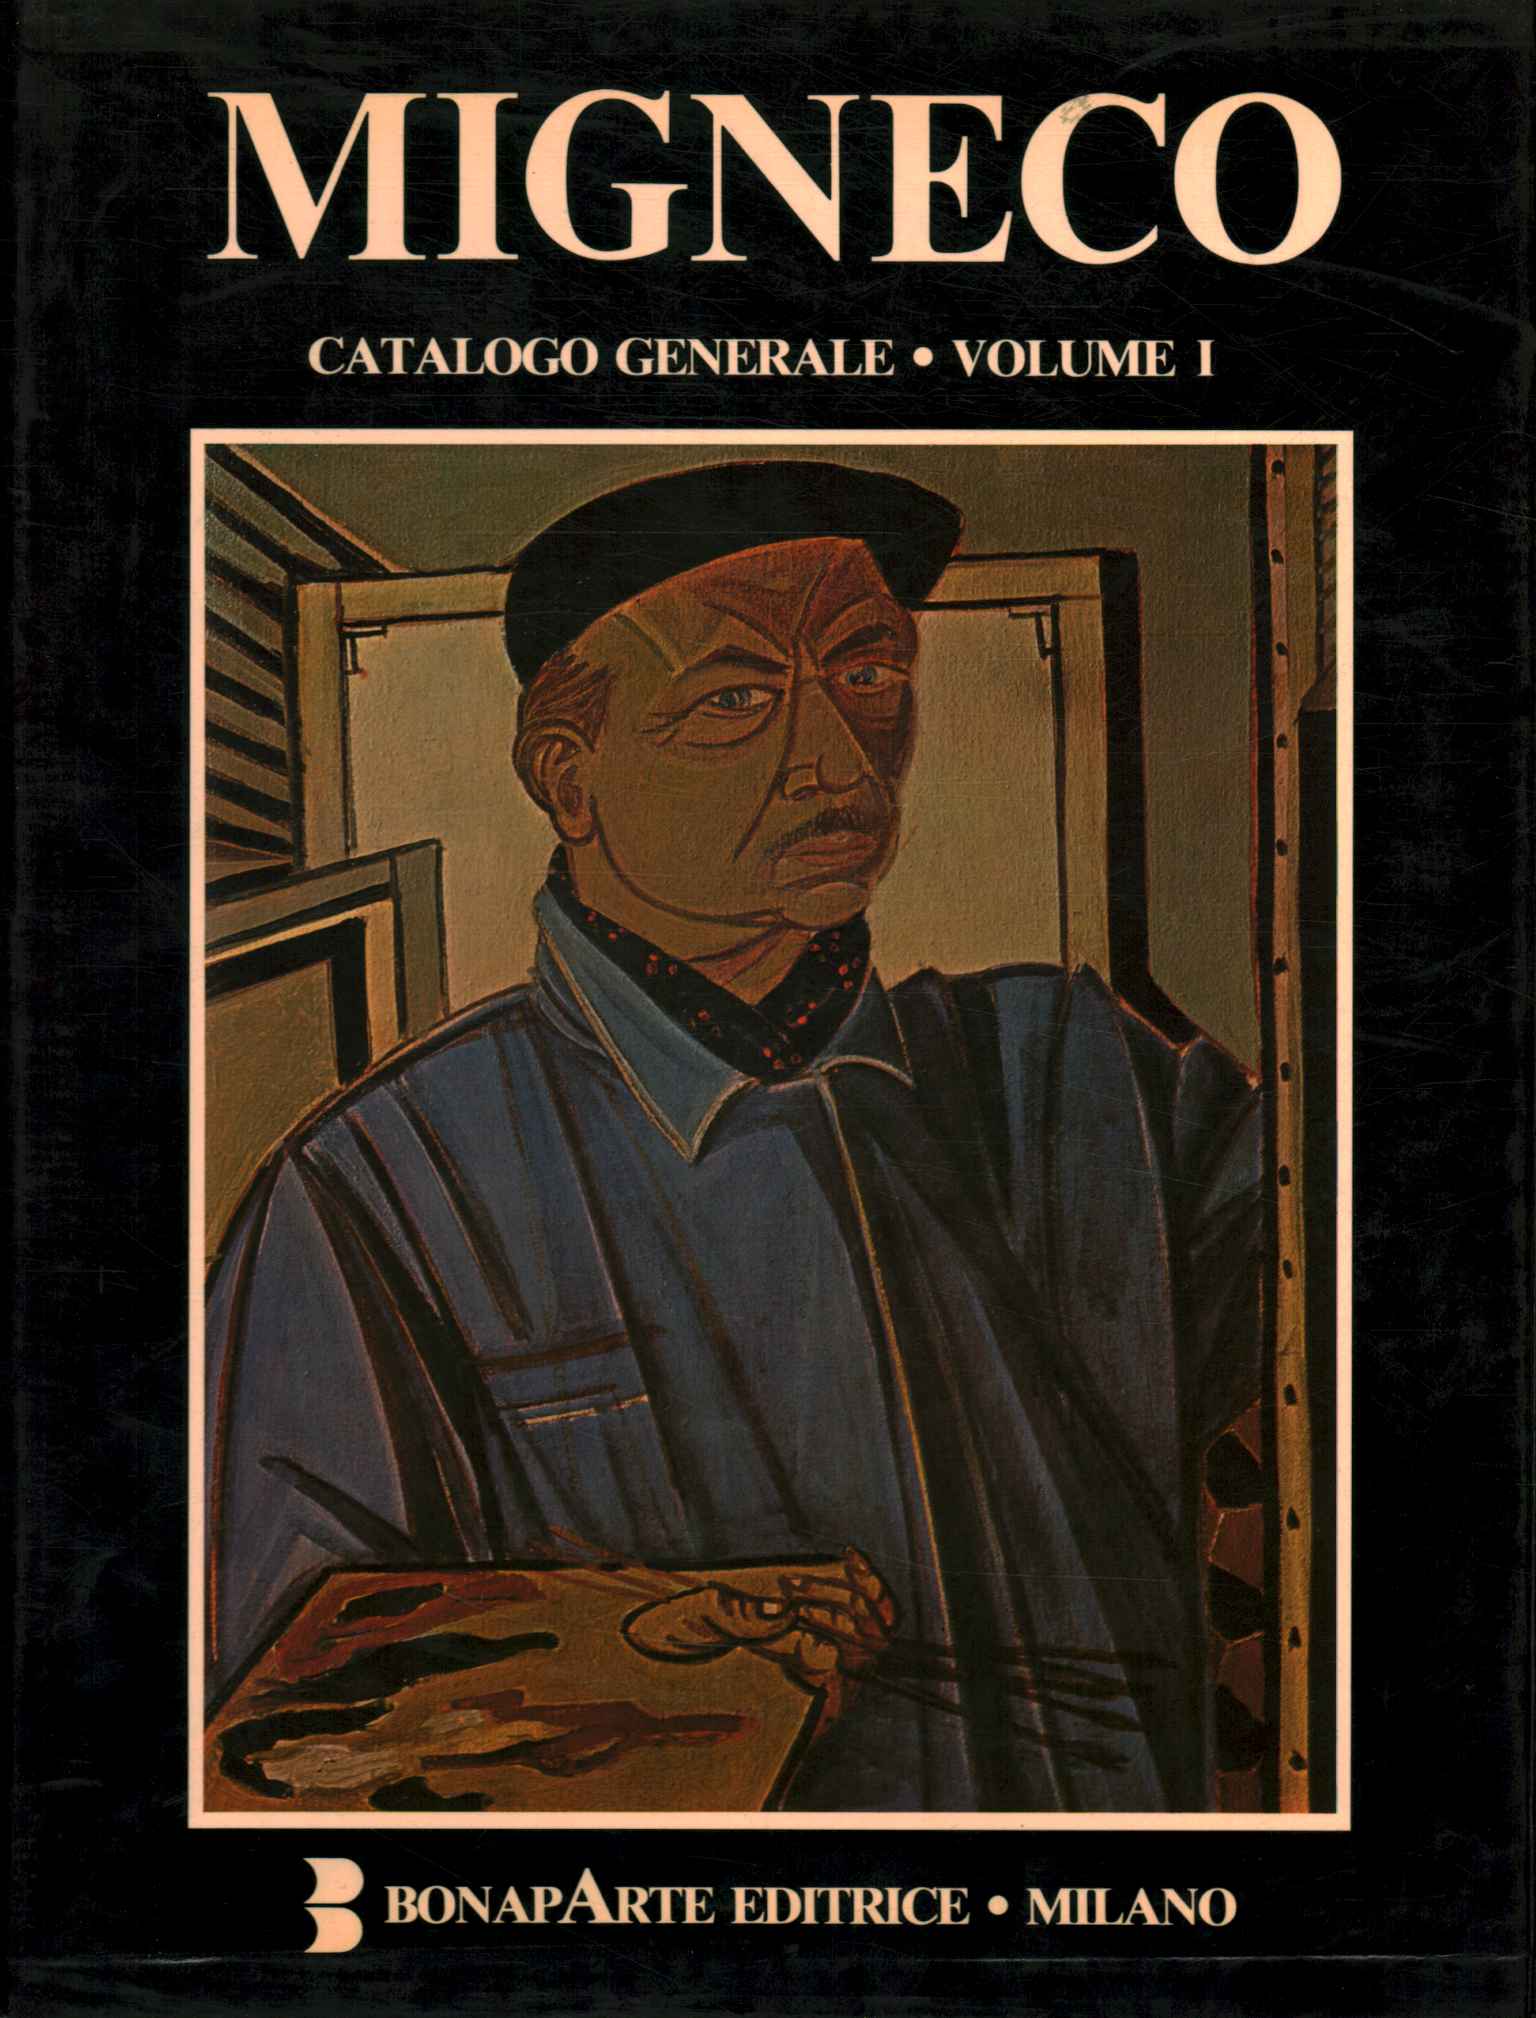 Migneco. General Catalog (Volume 1)